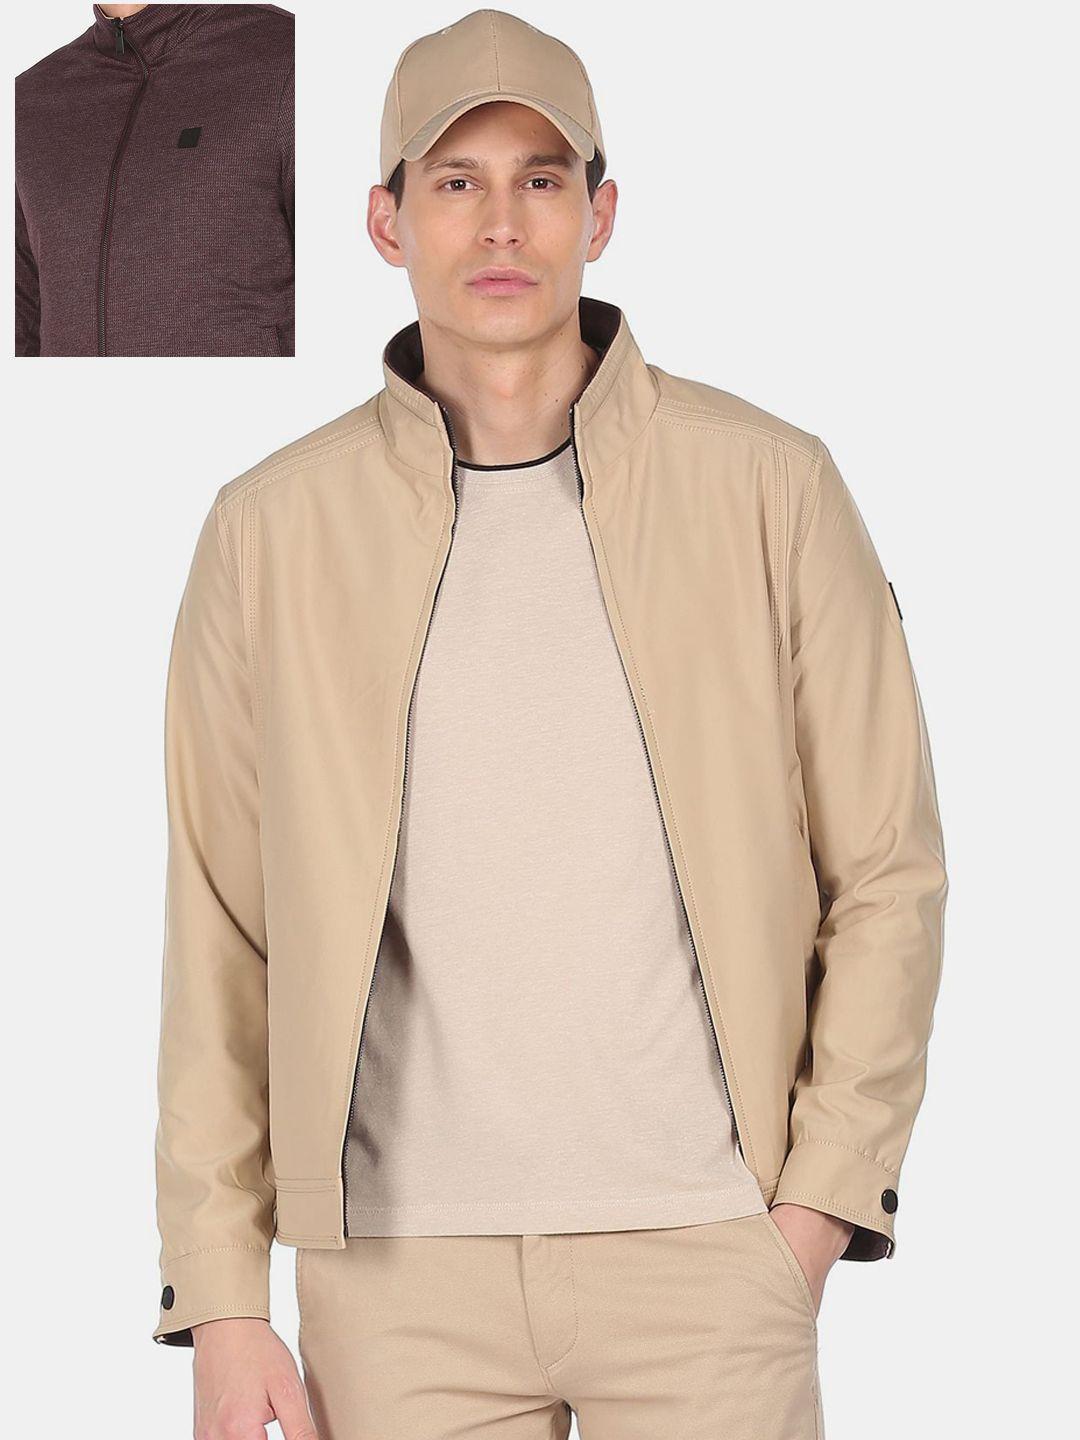 arrow-sport-men-beige-brown-tailored-reversible-jacket